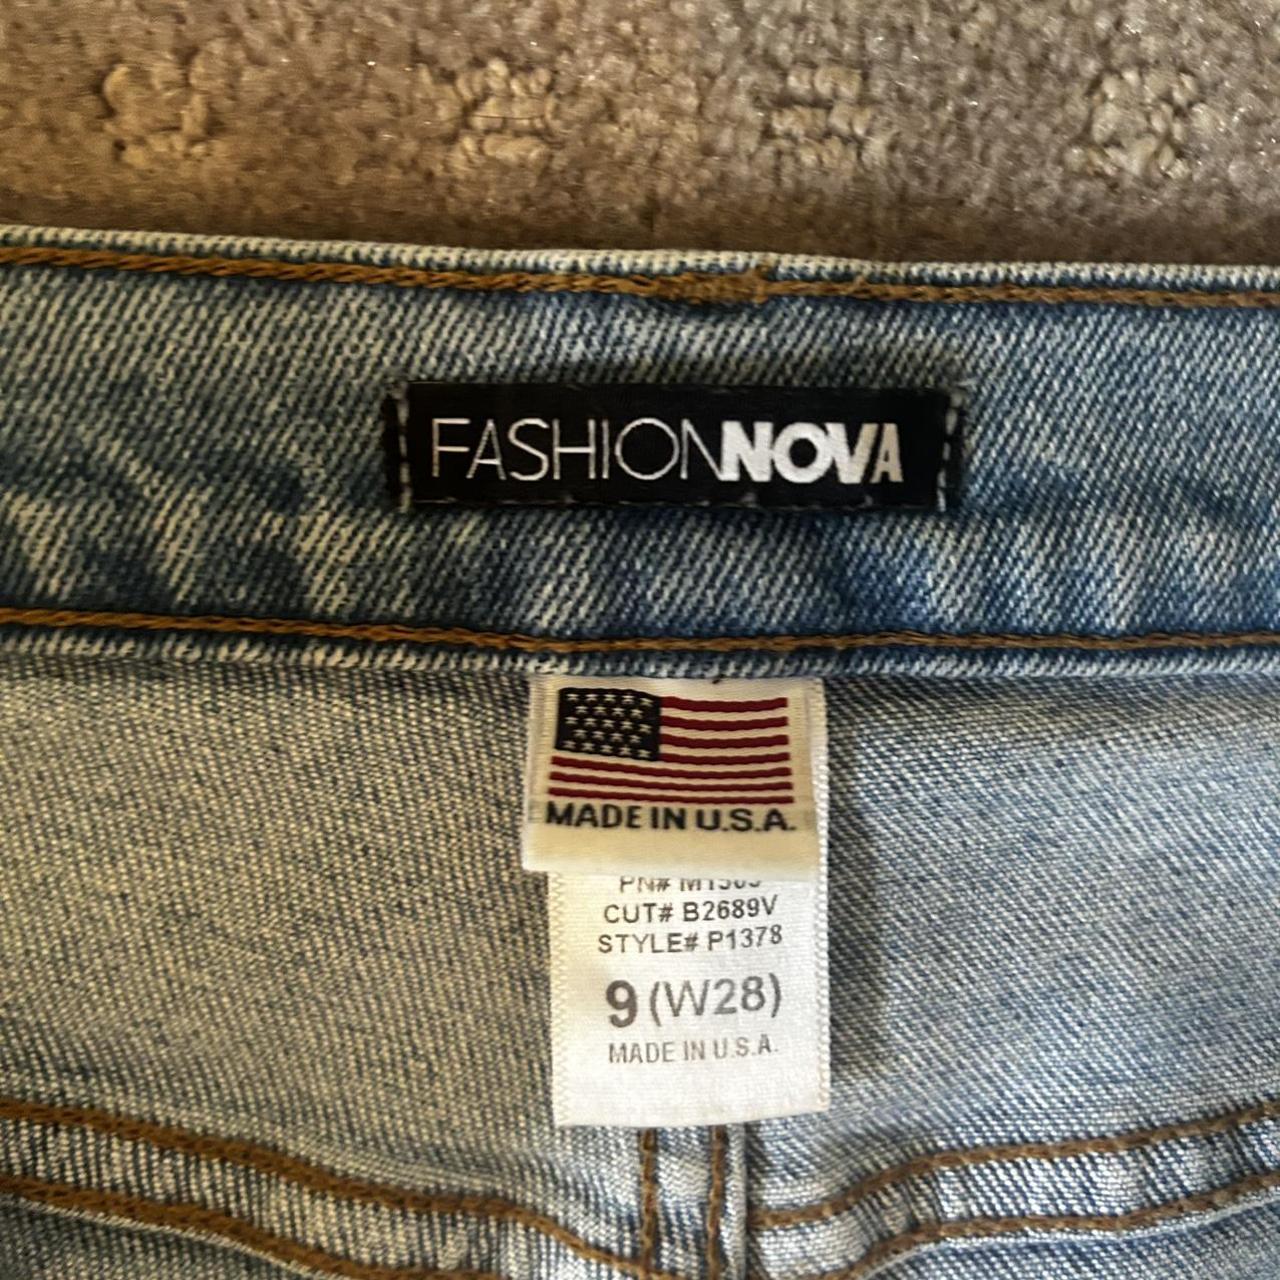 Fashion Nova Ripped Blue Jeans Genuinely the... - Depop